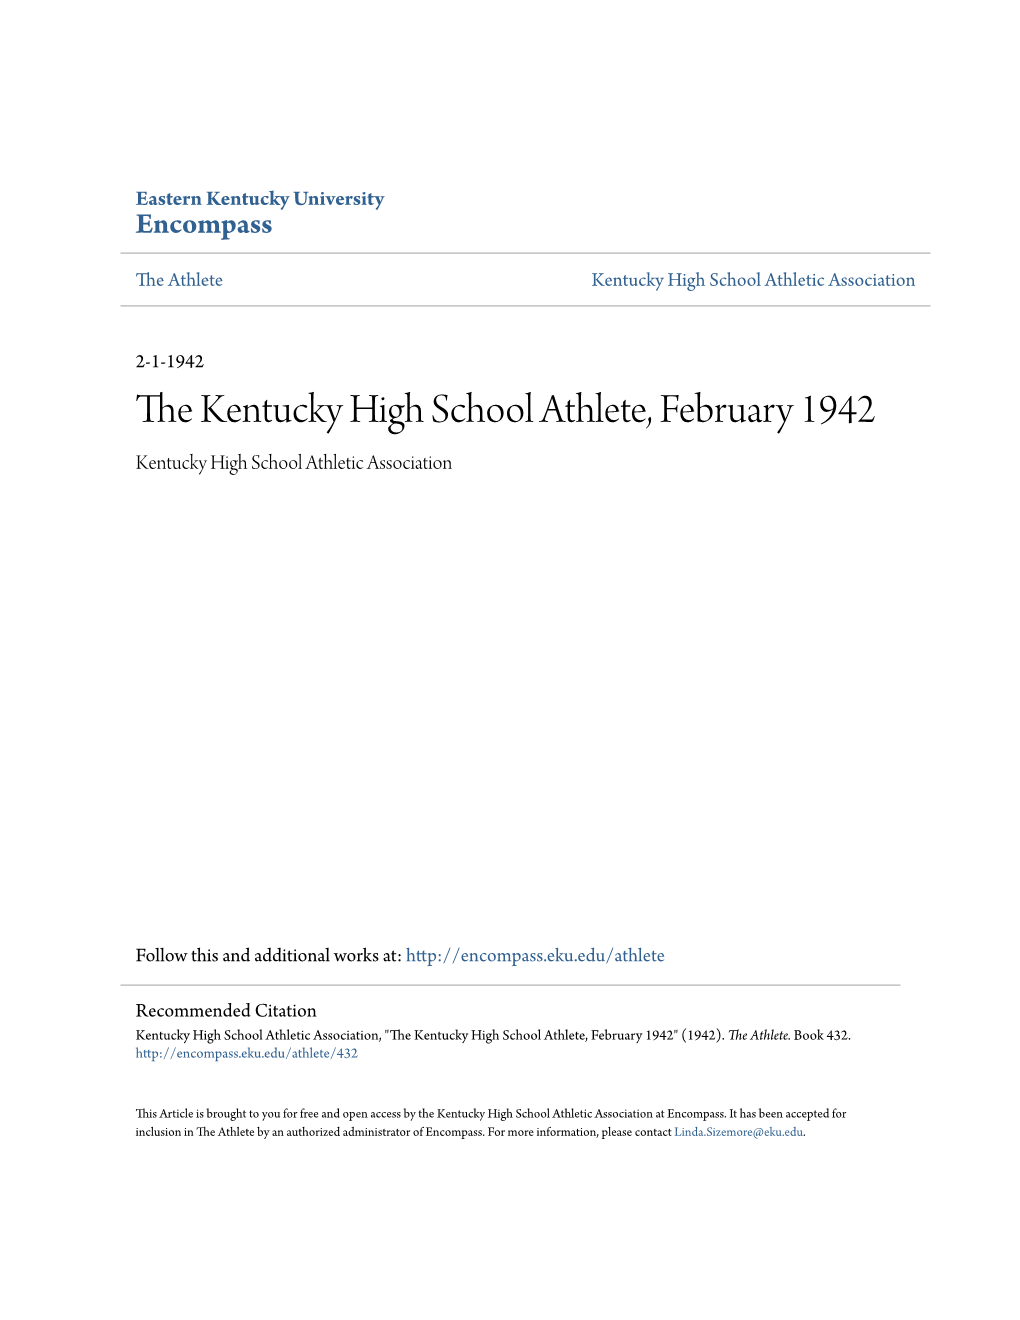 The Kentucky High School Athlete, February 1942 Kentucky High School Athletic Association